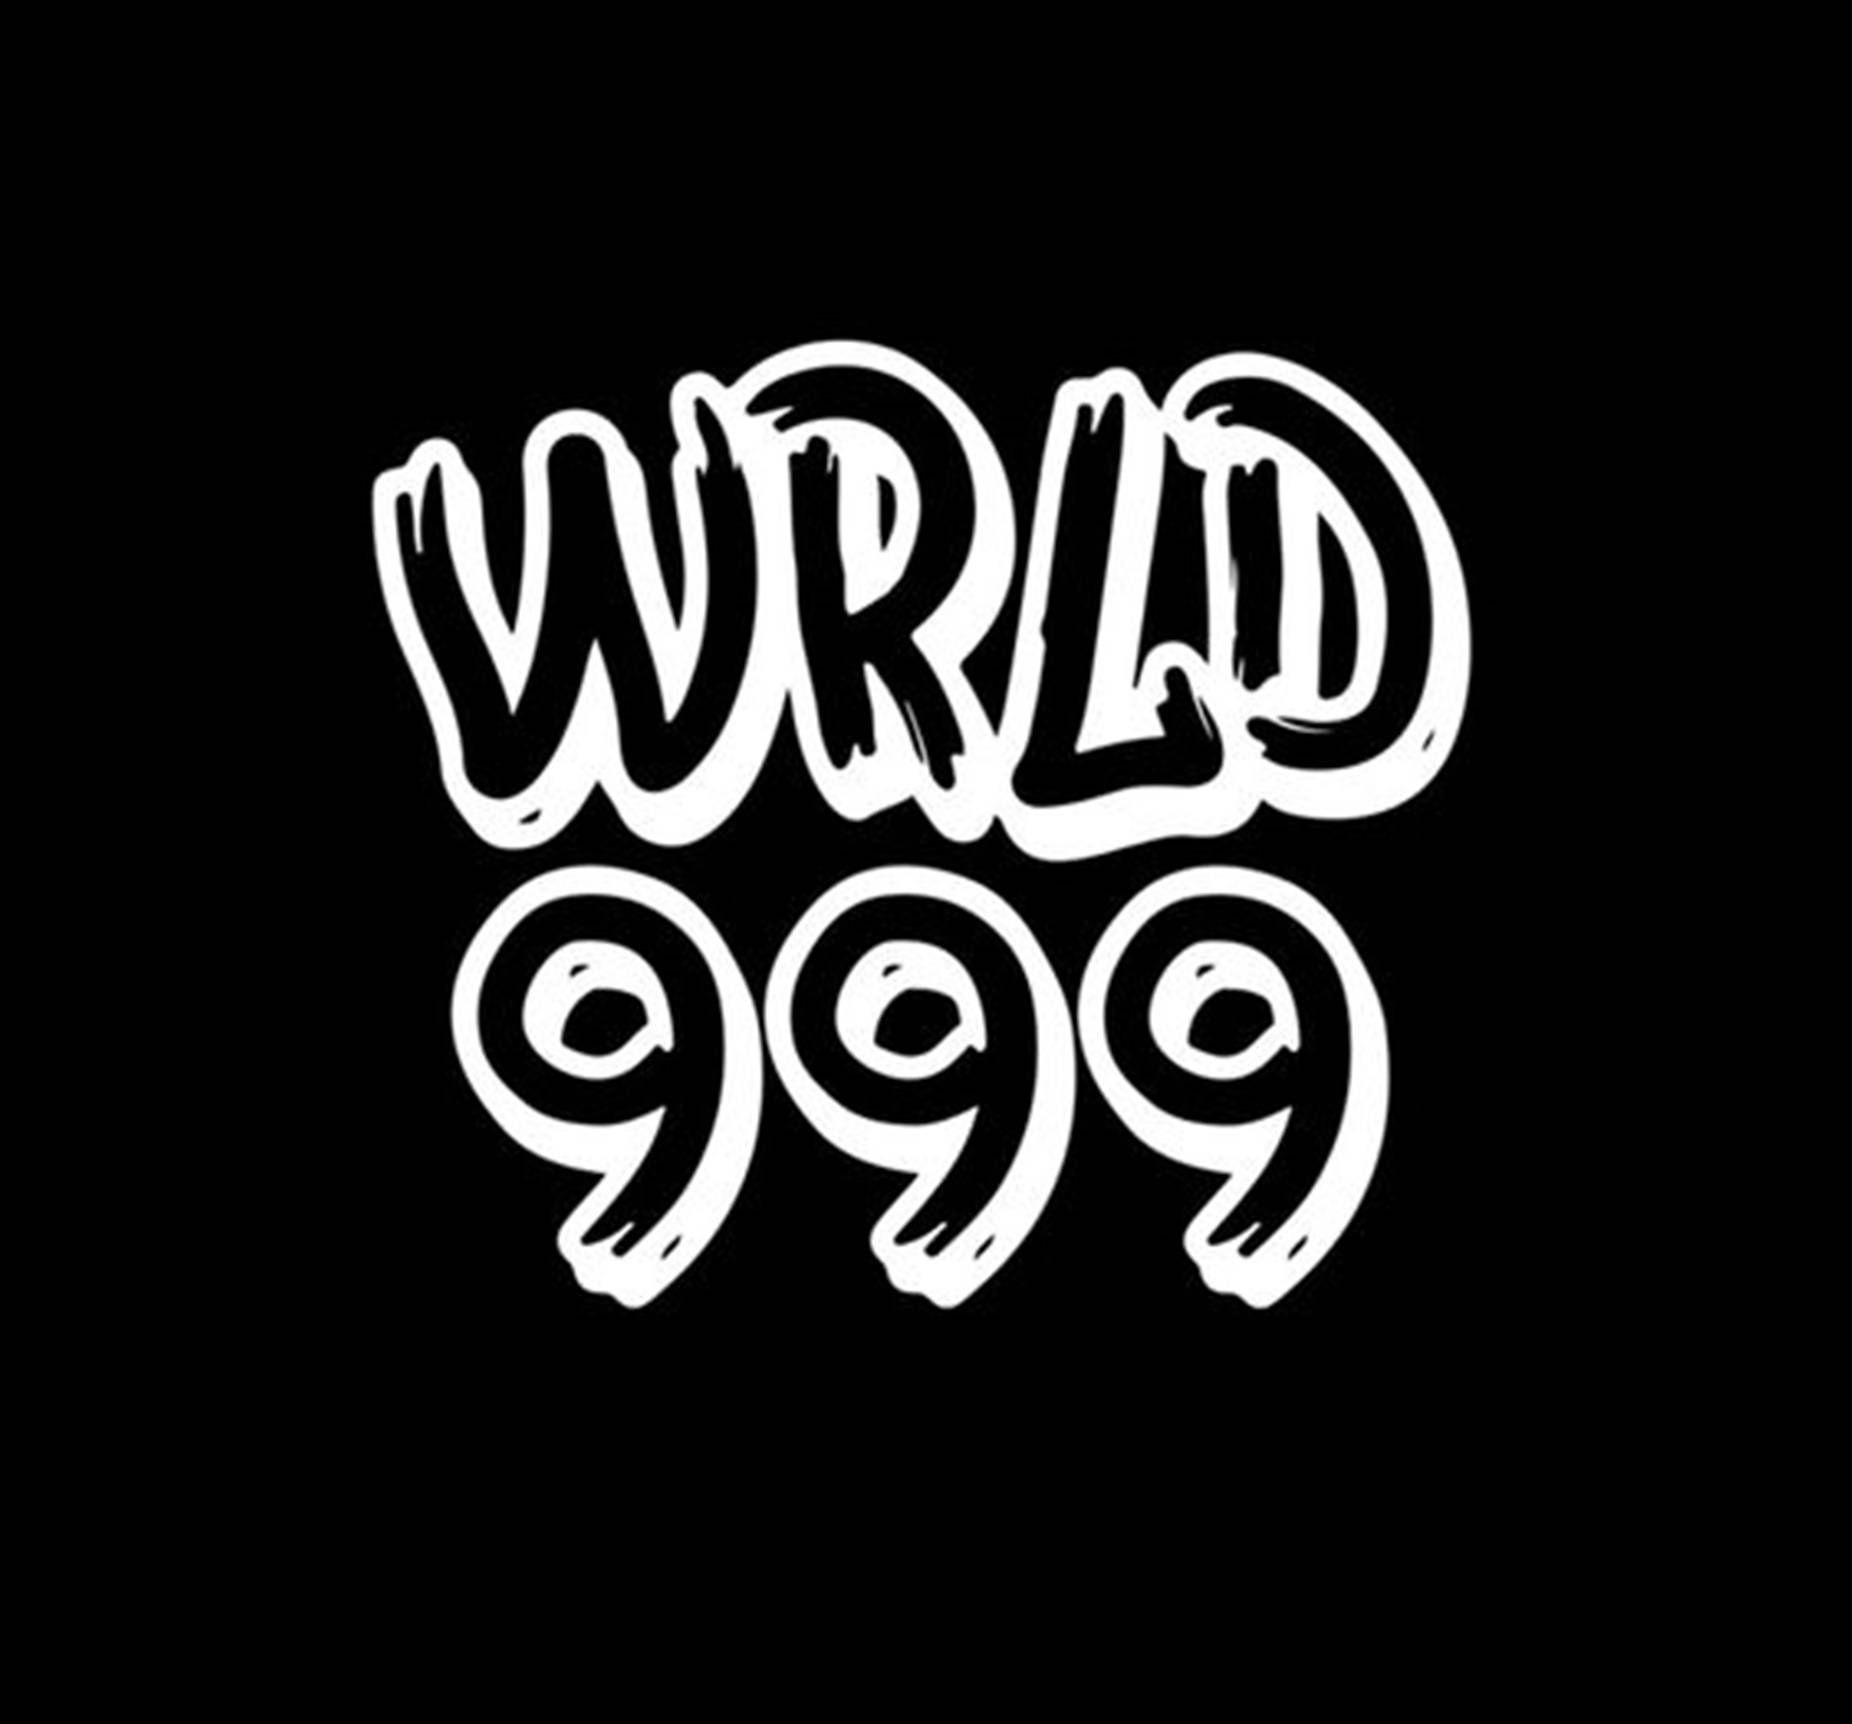 100+] Juice Wrld 999 Wallpapers